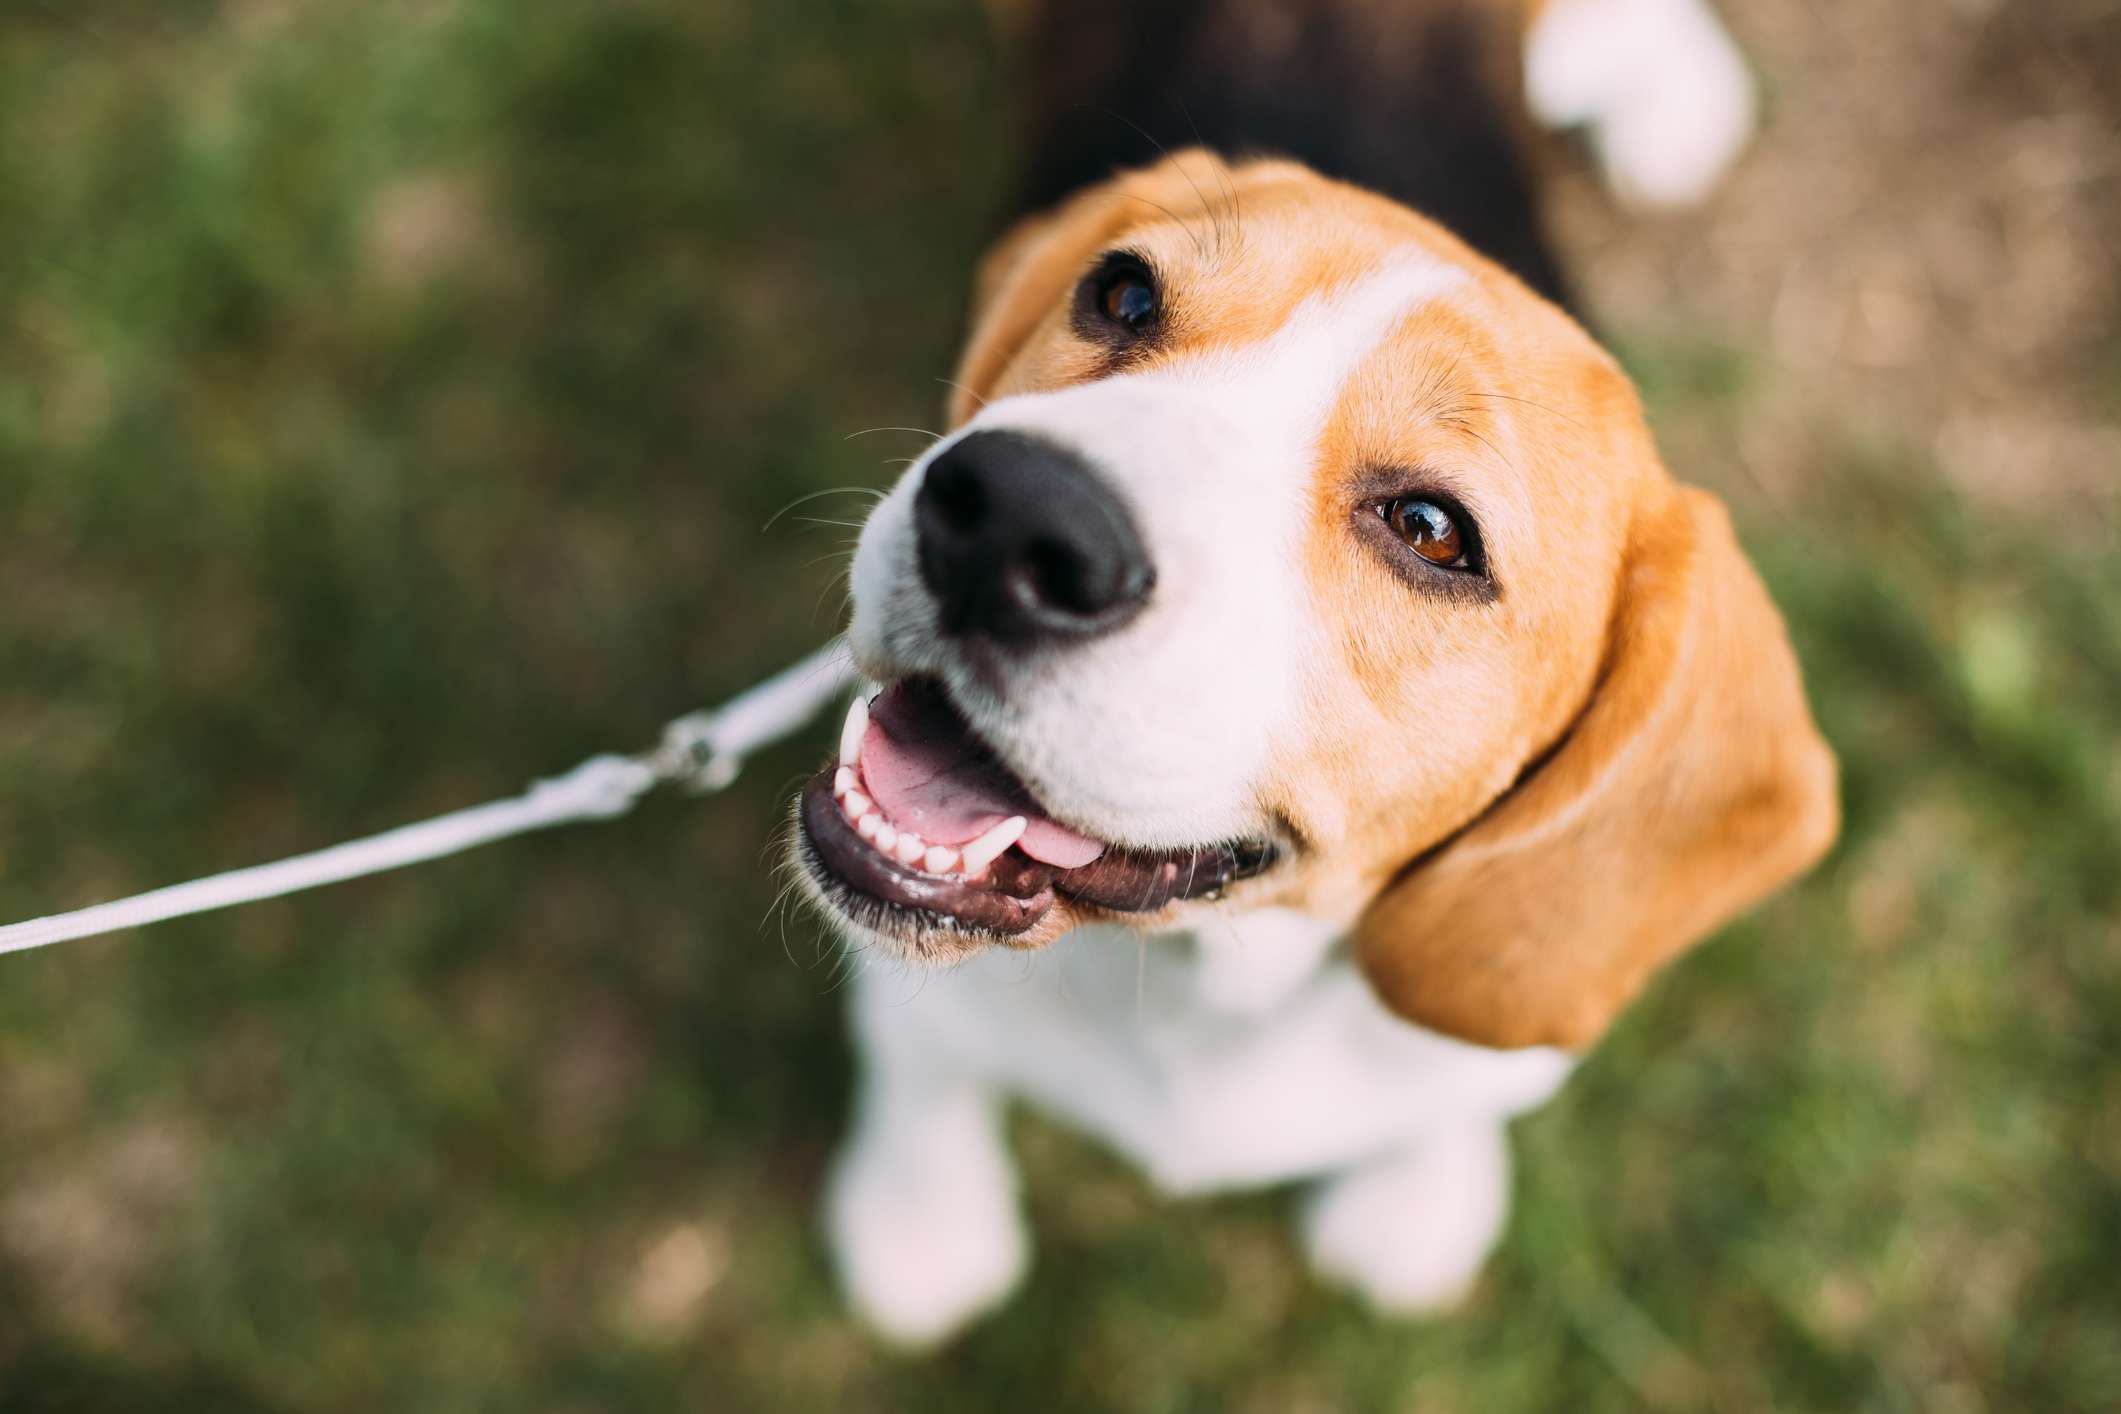 Beagle on a leash outside smiling